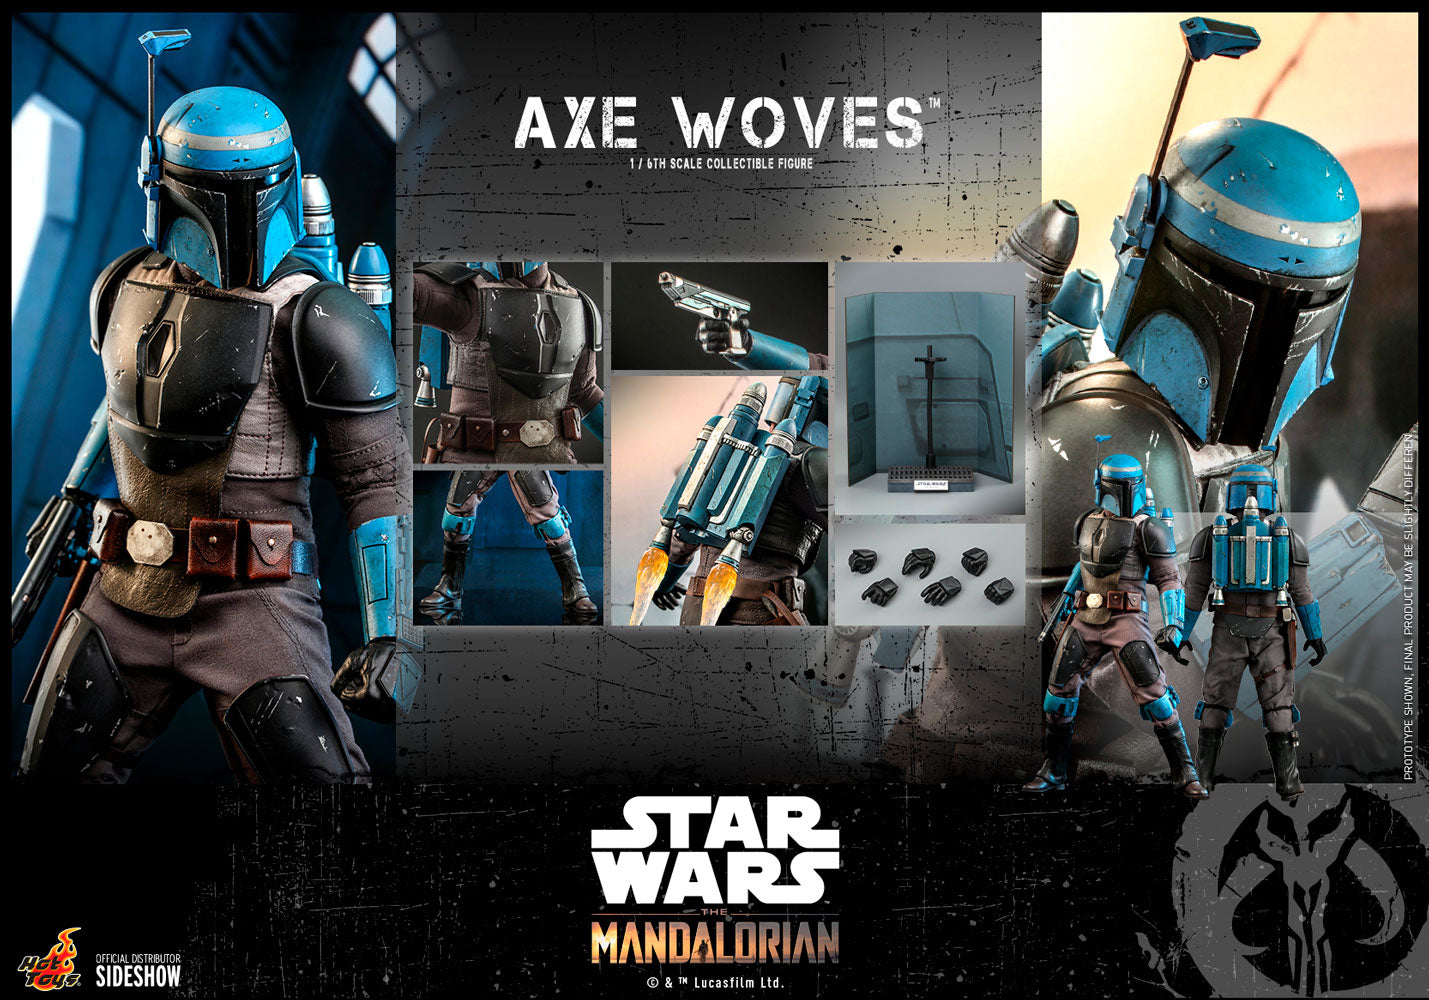 Hot Toys Star Wars The Mandalorian Axe Woves